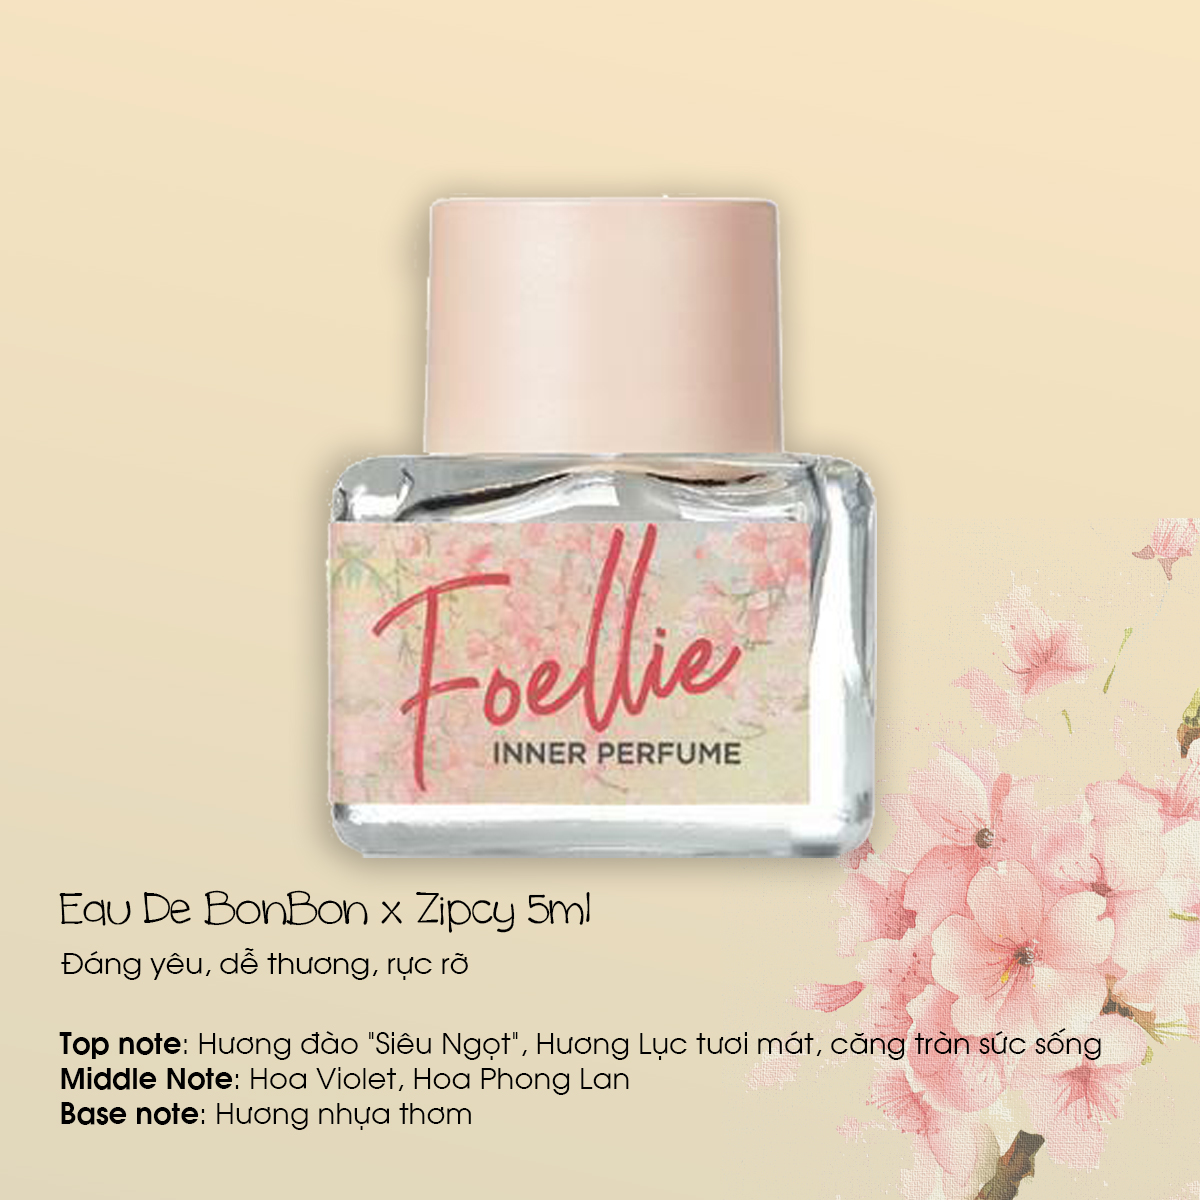 Nước hoa vùng kín Foellie Eau De BonBon x Zipcy Inner Perfume 5ml